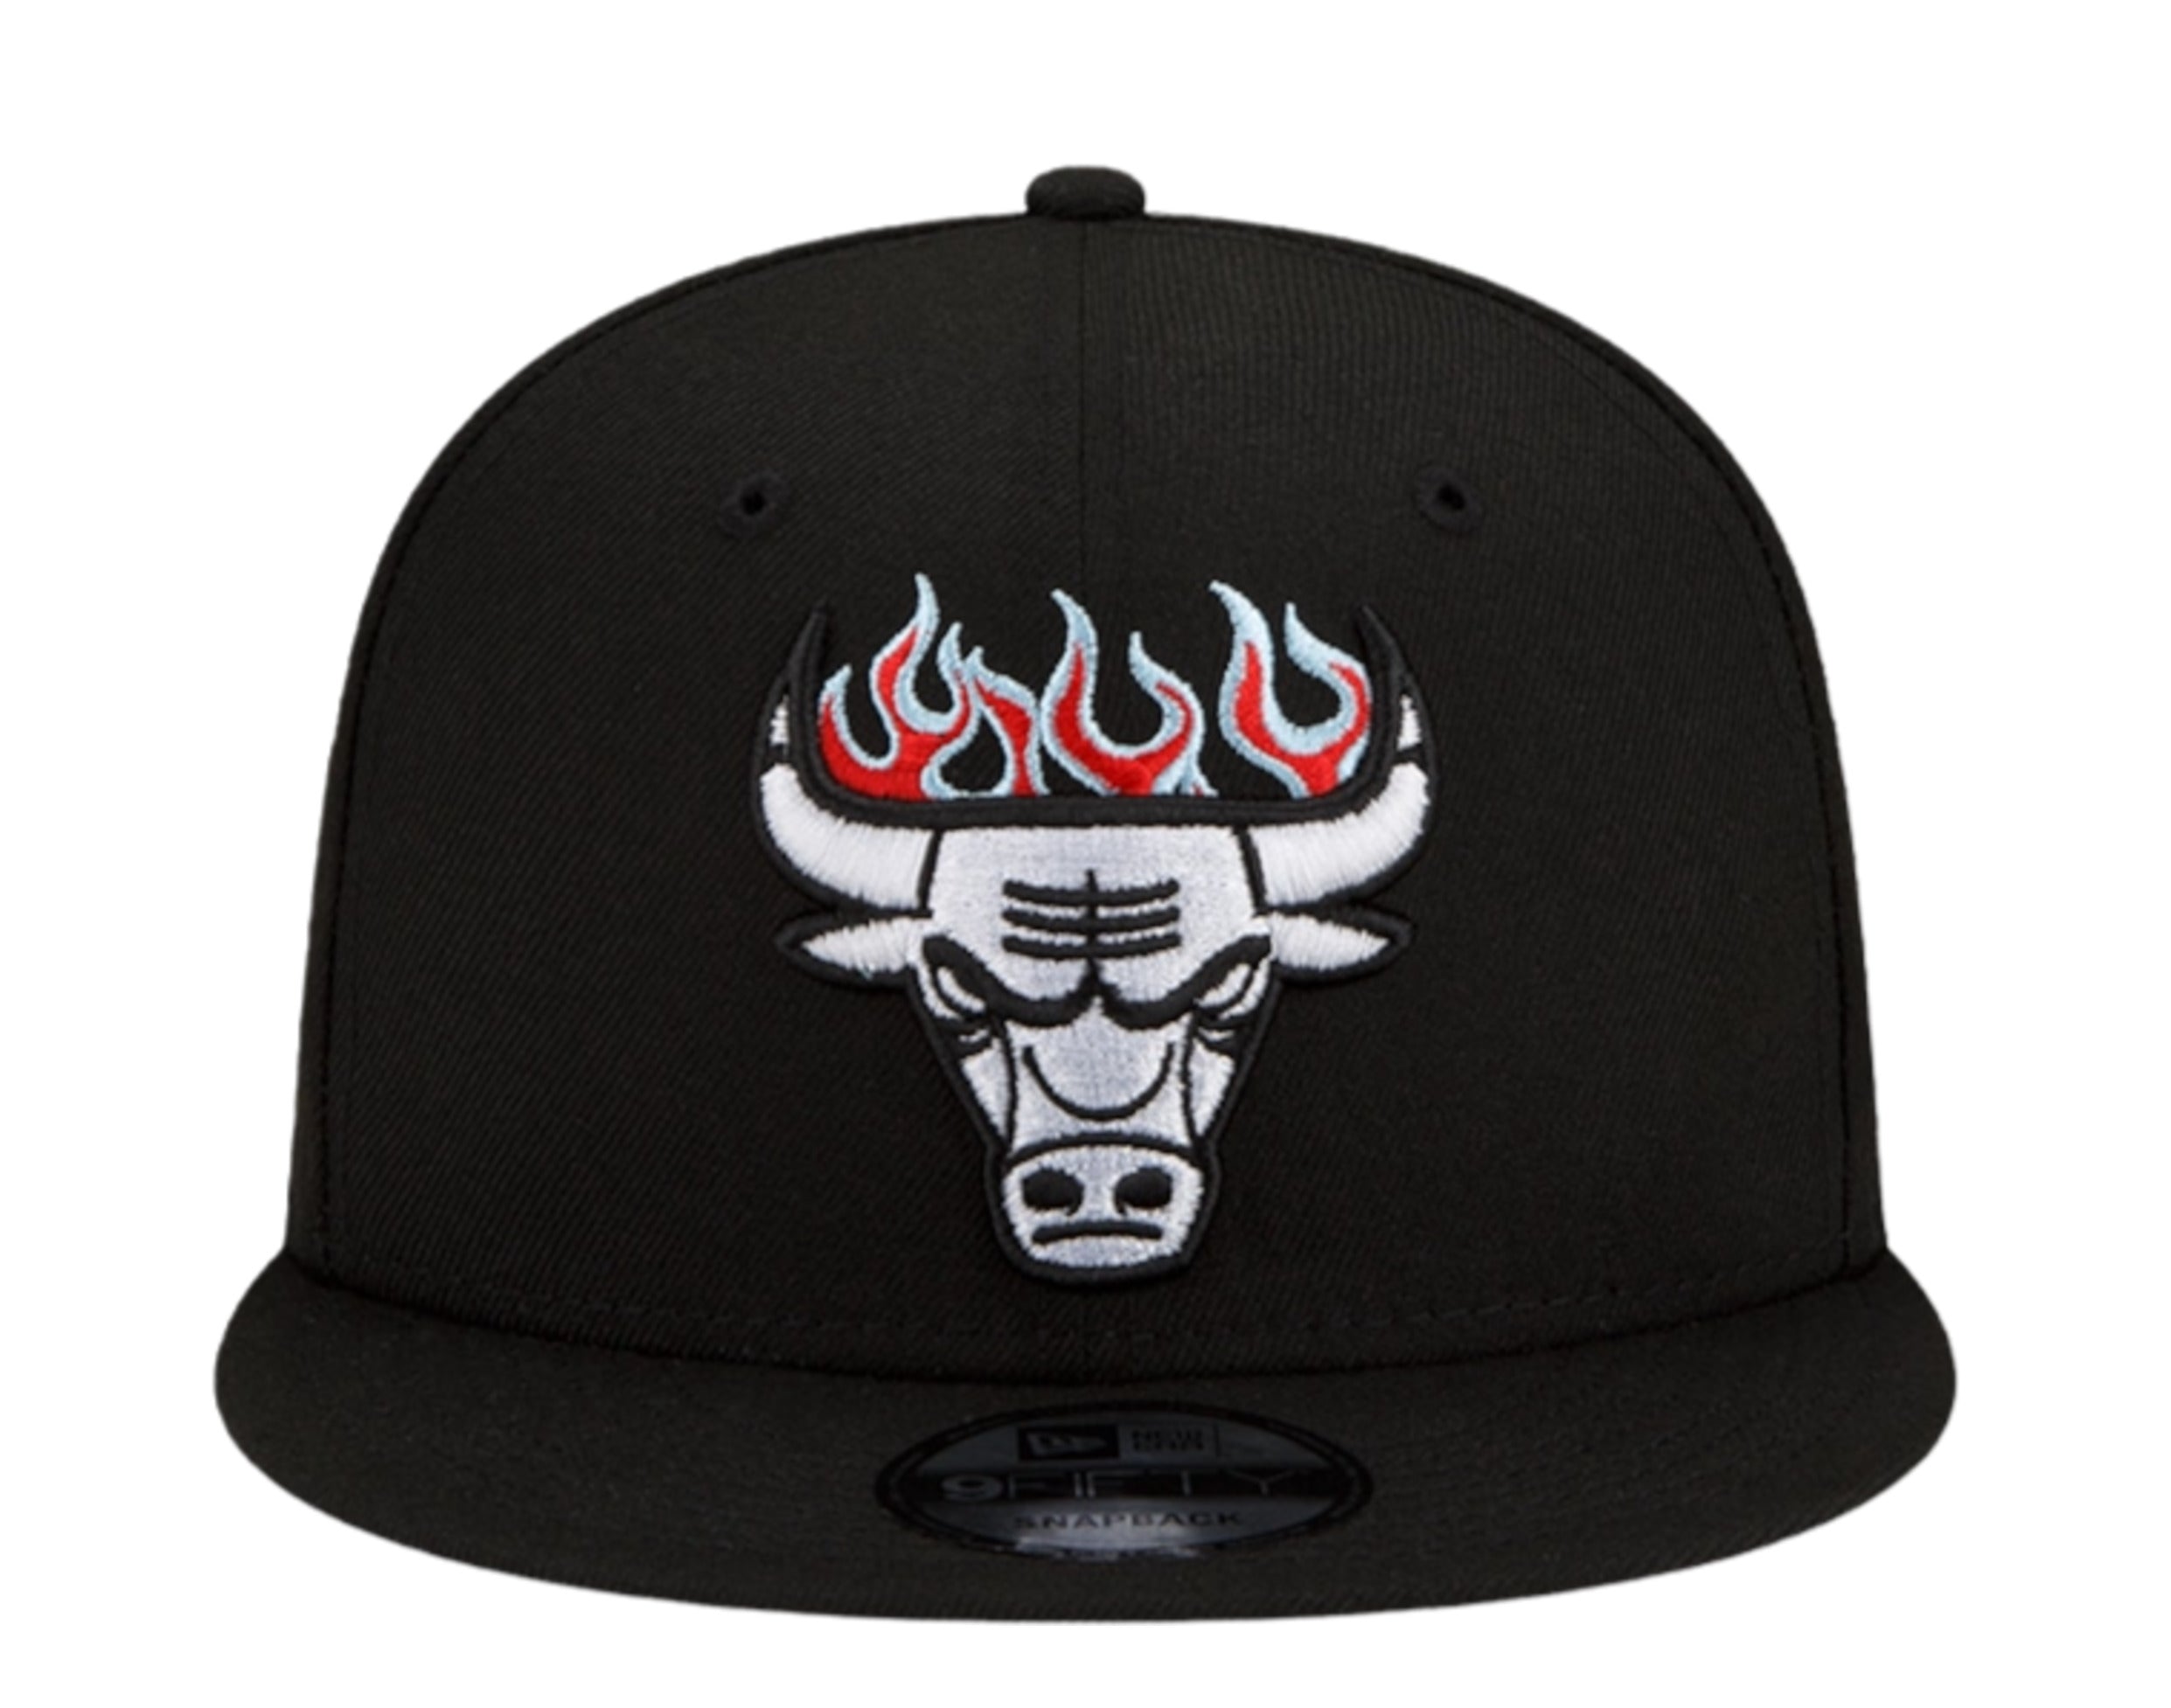 Caps New Era Chicago Bulls Team Patch 9FIFTY Snapback Cap Black/ Red